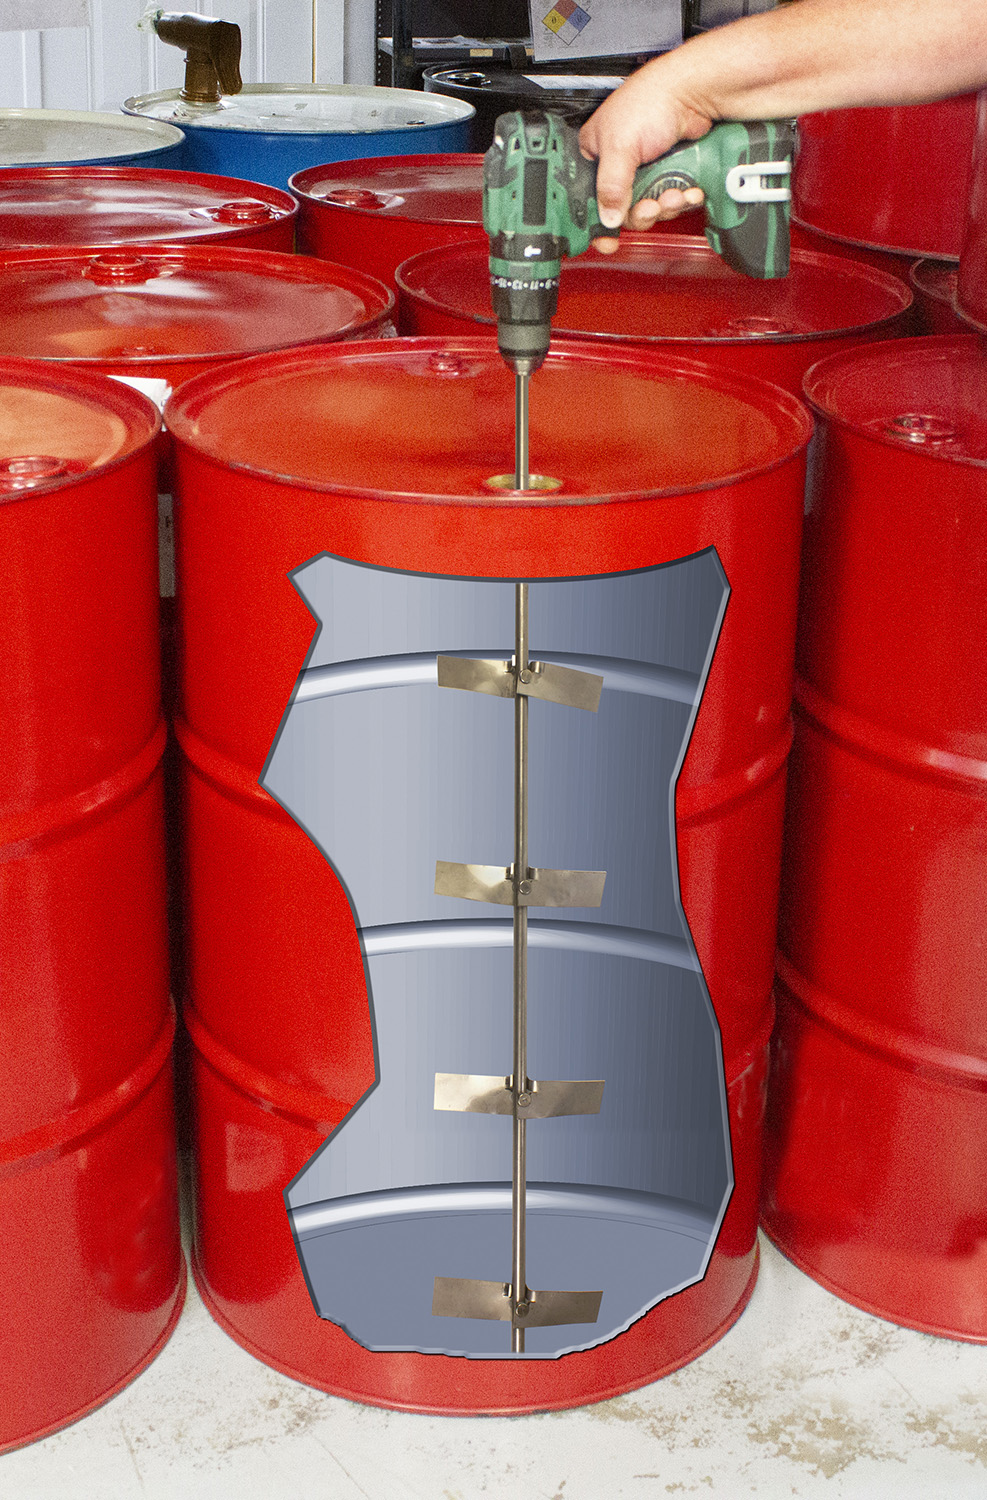 Paint Mixer - Mix easily paint in a 55 Gallon Drum - Paint agitator